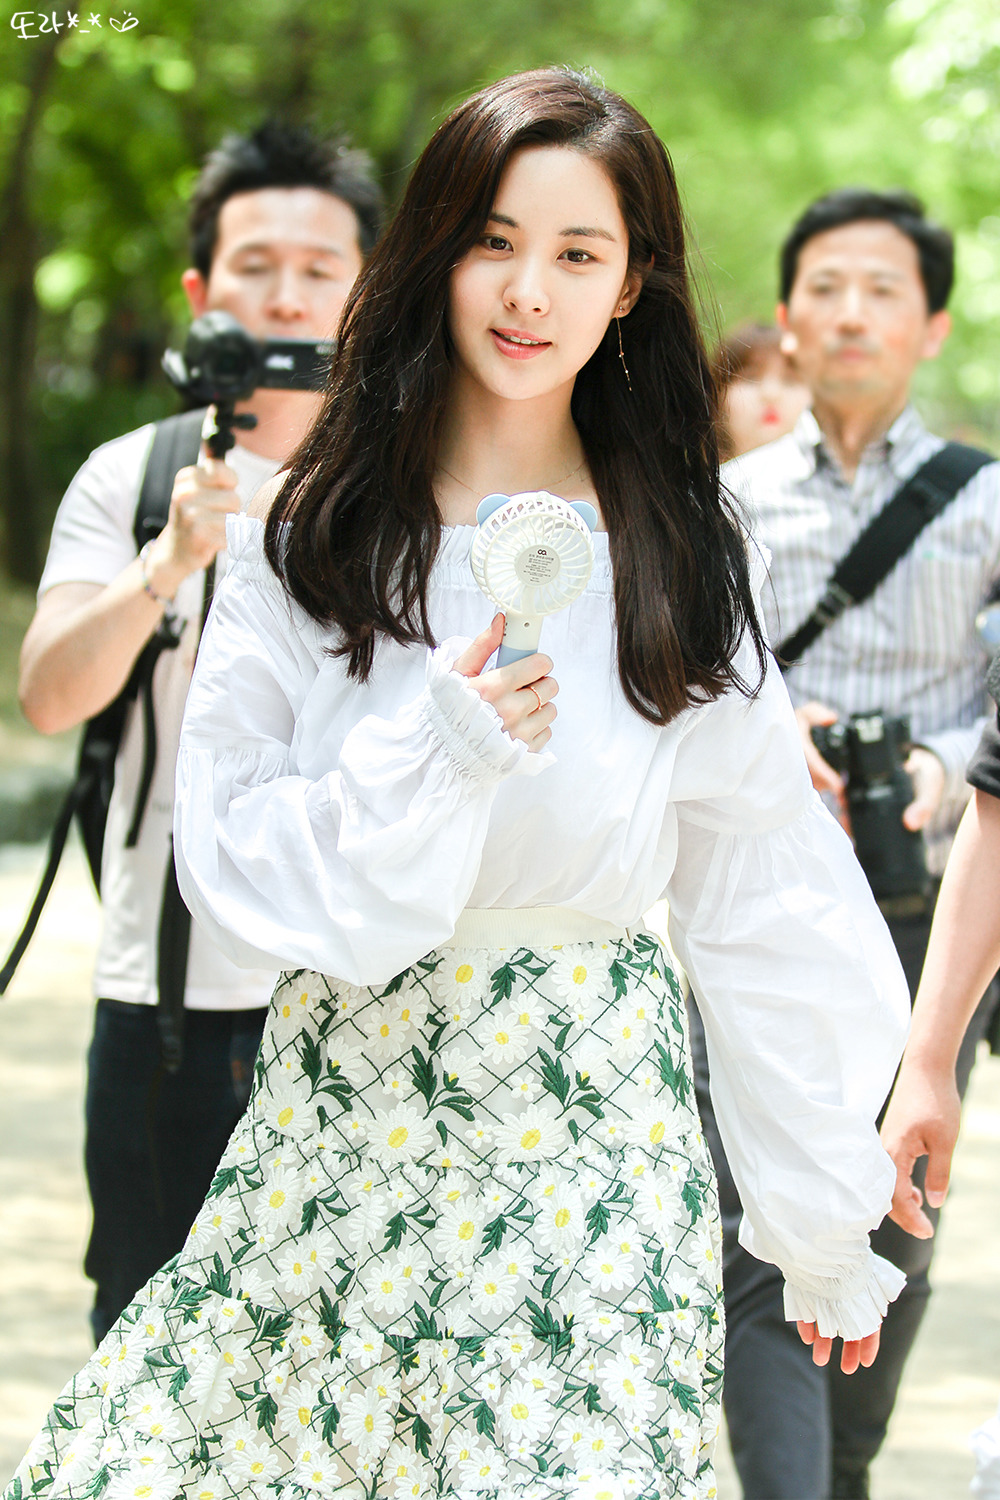  [PIC][03-06-2017]SeoHyun tham dự sự kiện “City Forestival - Maeil Duyou 'Confidence Diary'” vào chiều nay - Page 3 276AED485937A63B31B03E